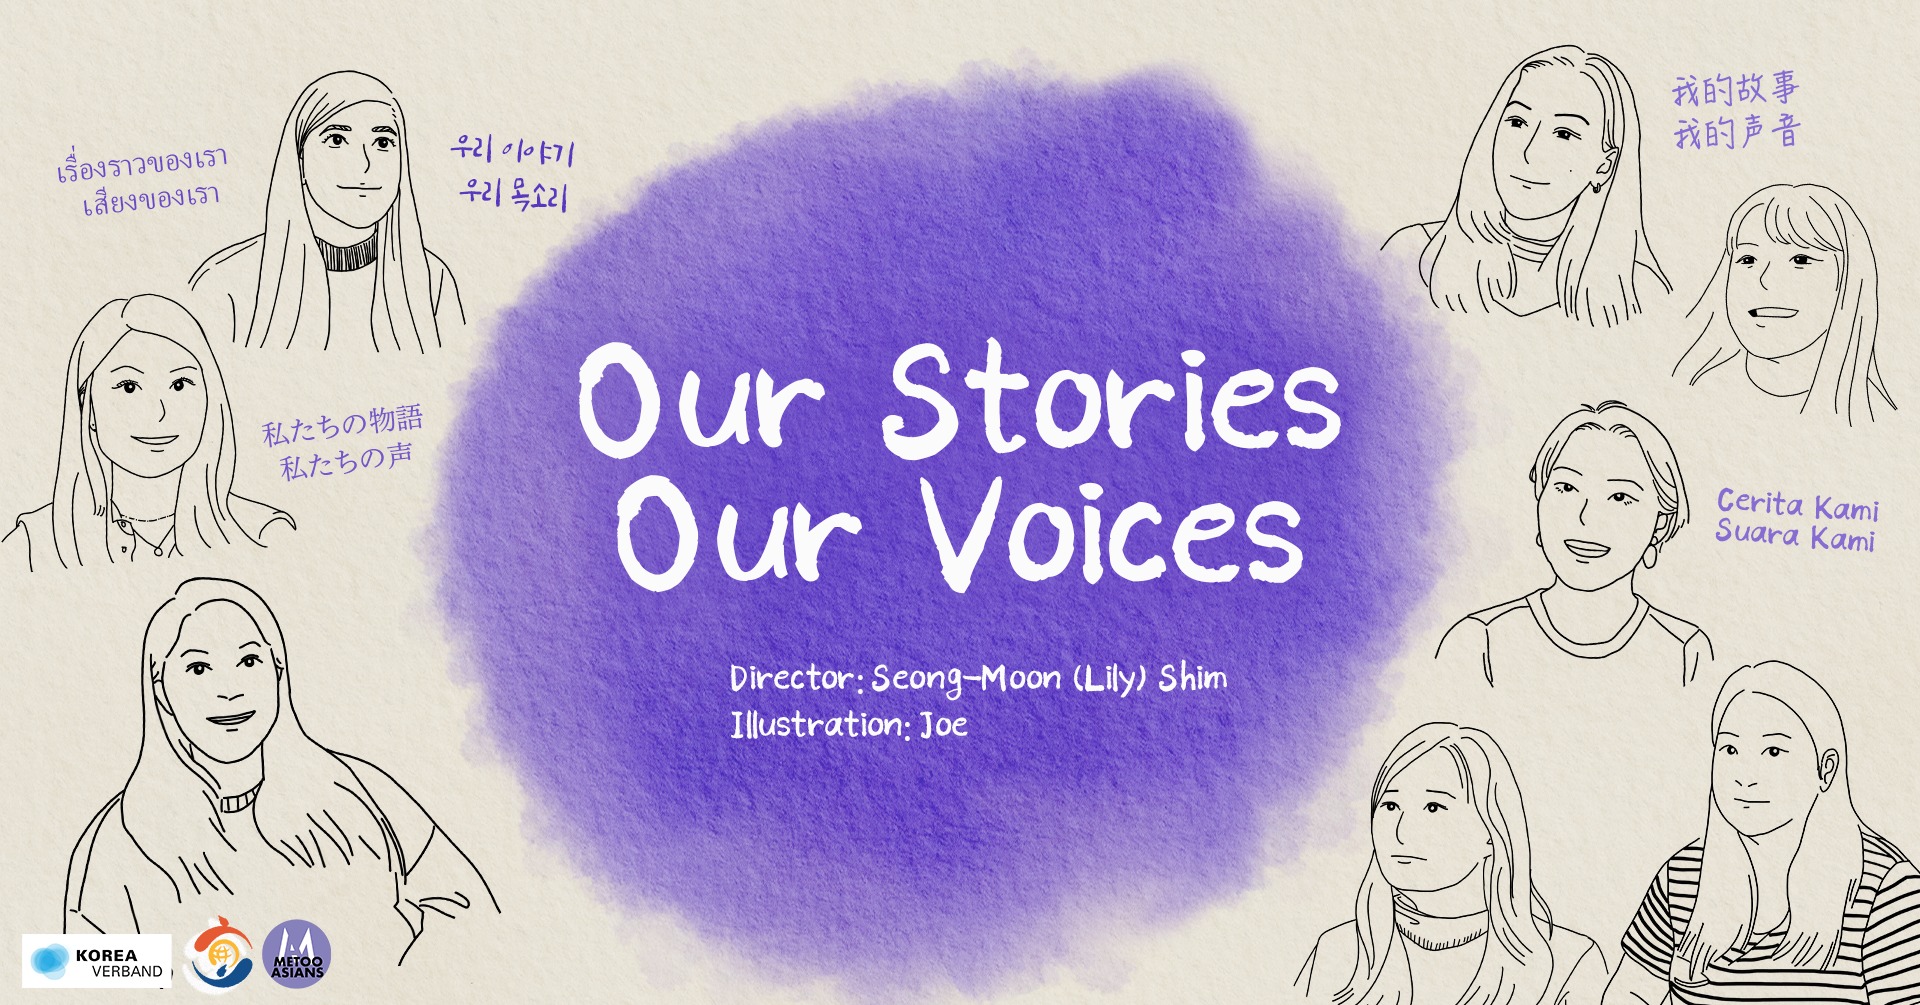 poster für das film screening our stories our voices seong moon shim korea verband